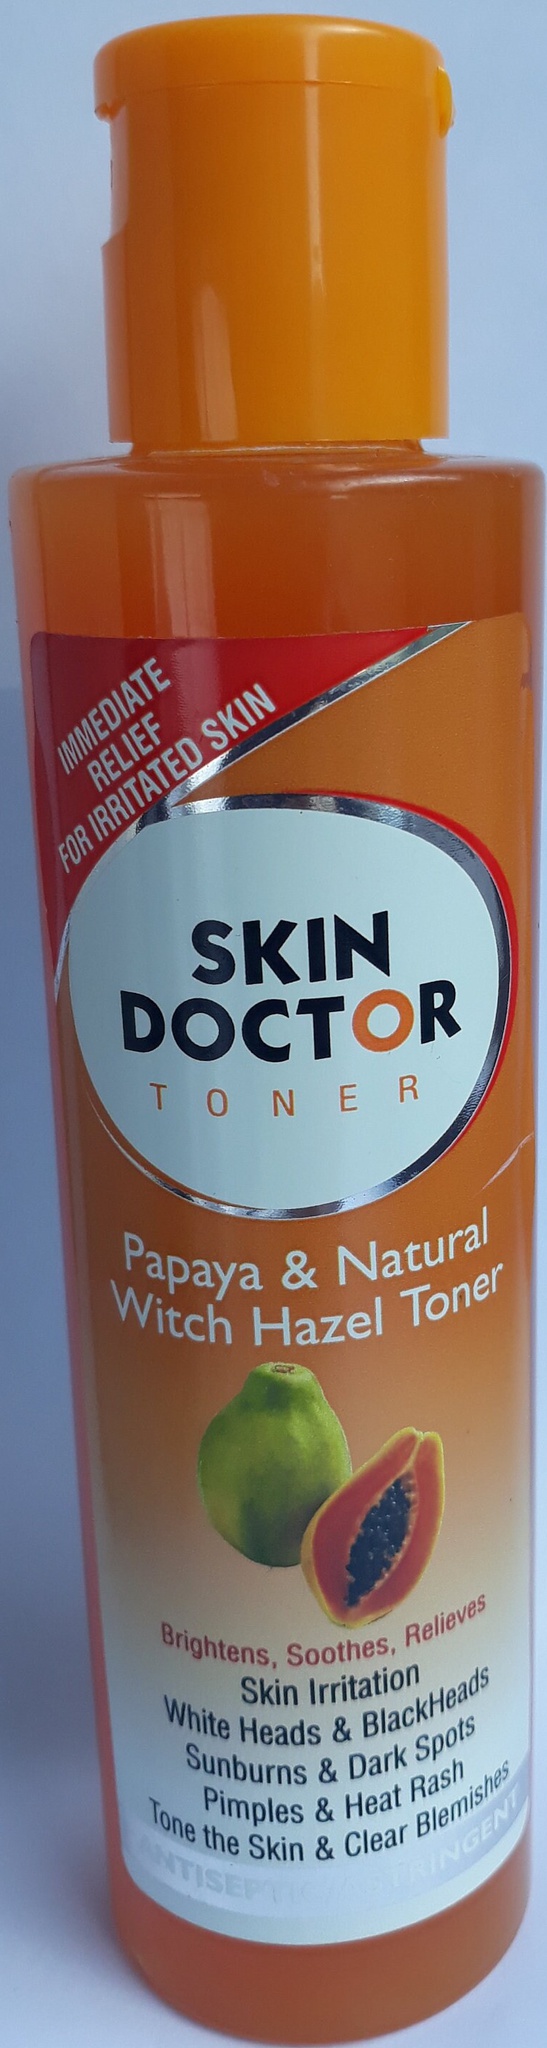 Skin Doctor Toner